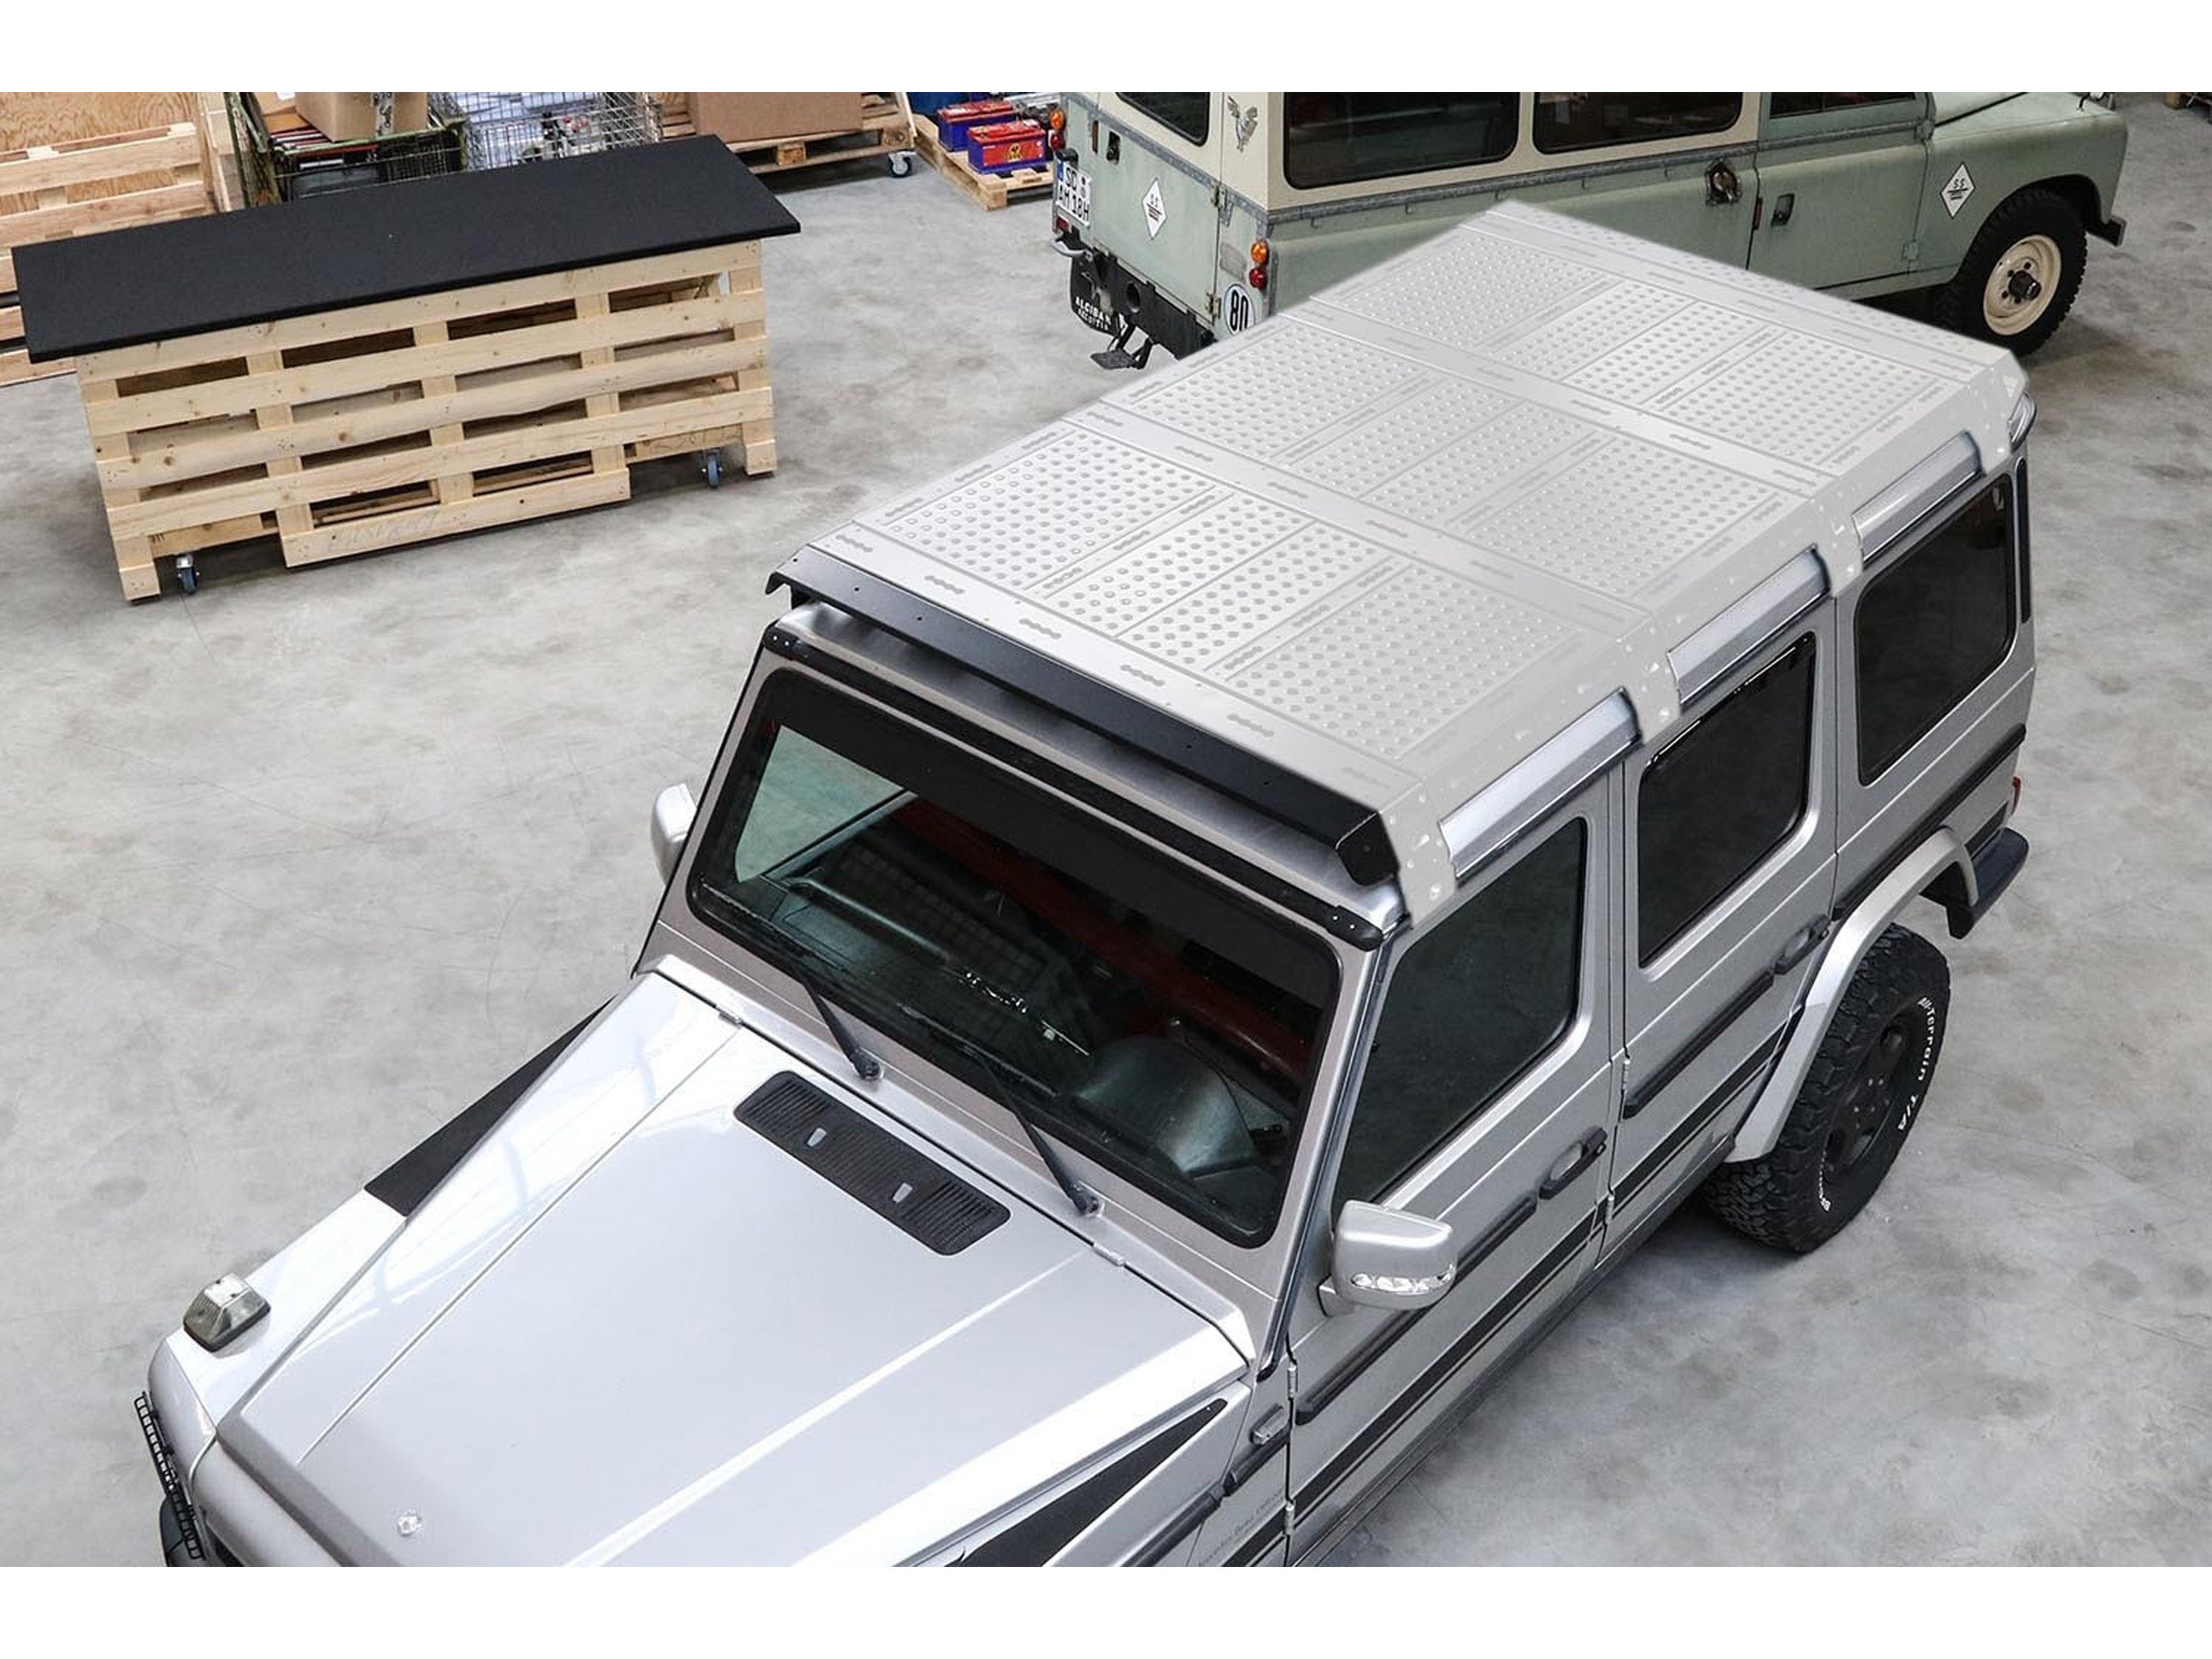 CargoBear 2.0 Modular Roof Rack System - wind deflector for Mercedes G-Wagen rack